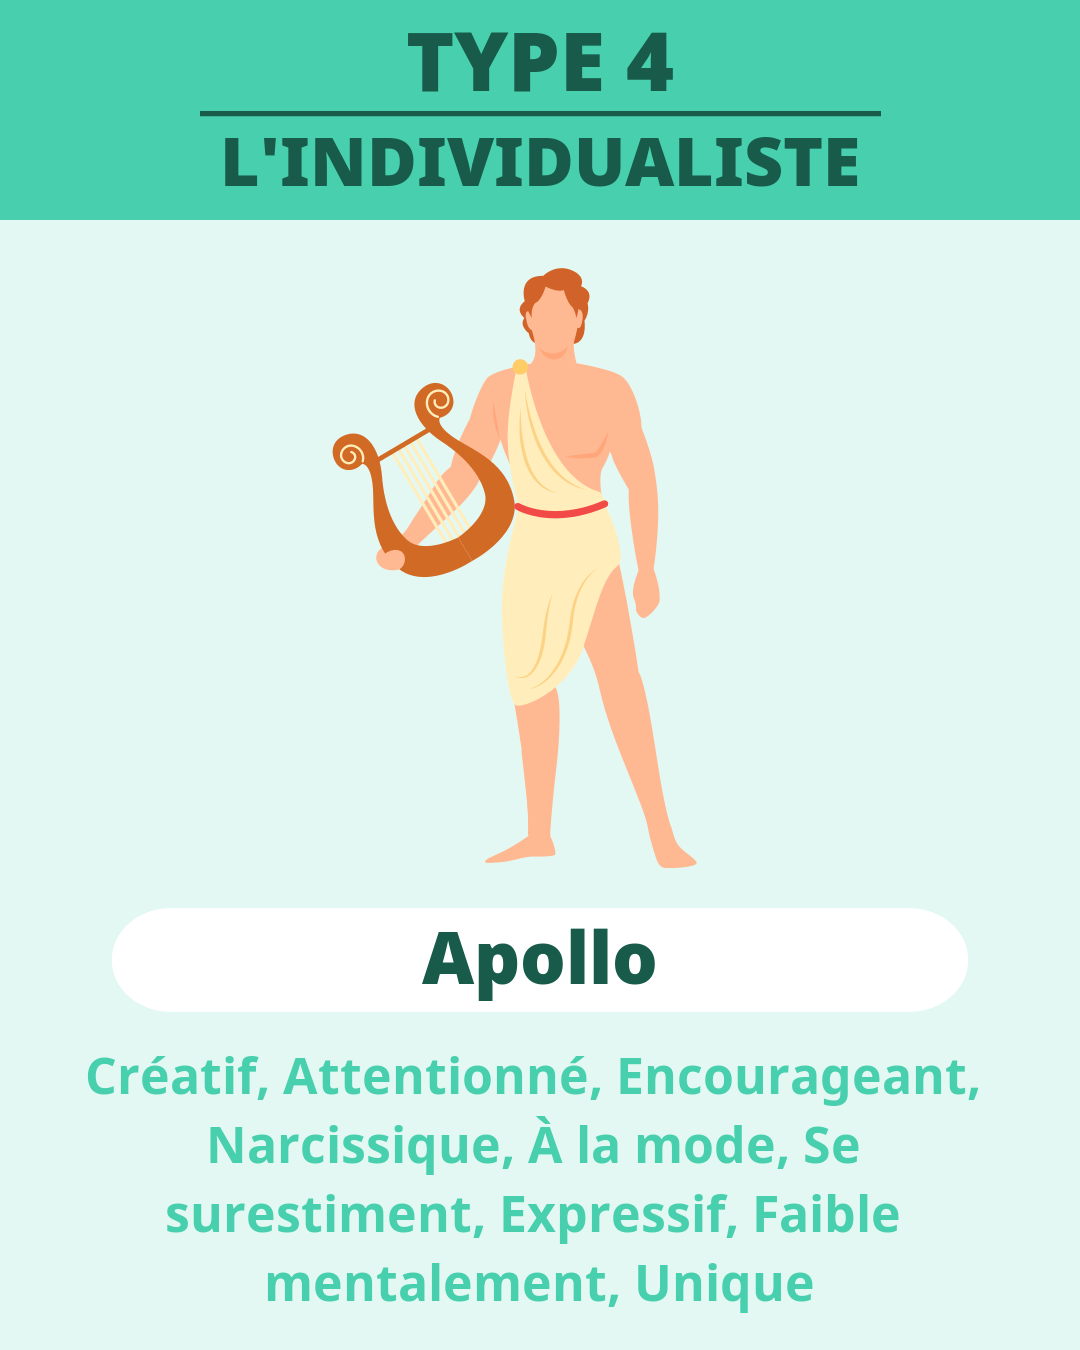 TYPE 4 - Apollo(L'INDIVIDUALISTE)